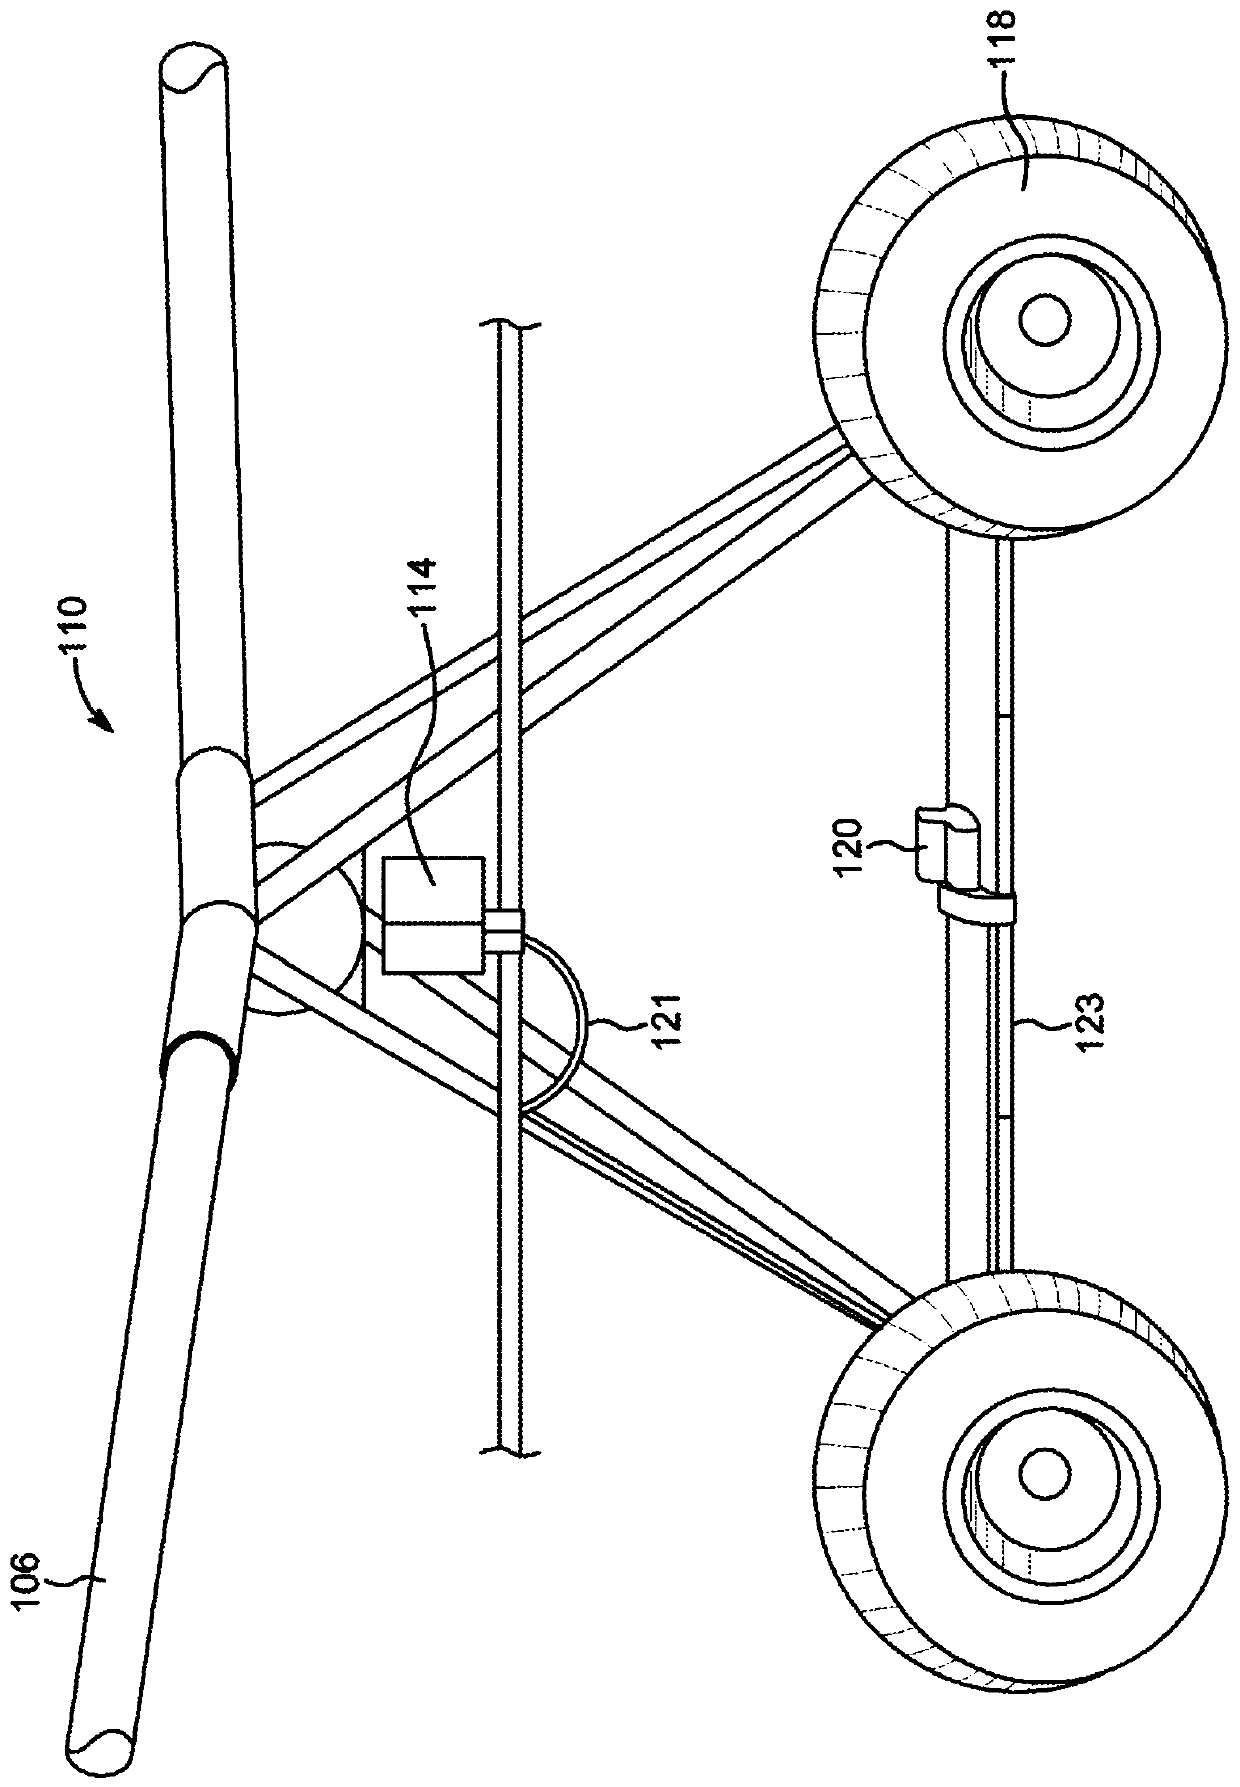 Electronic braking system for an irrigation machine